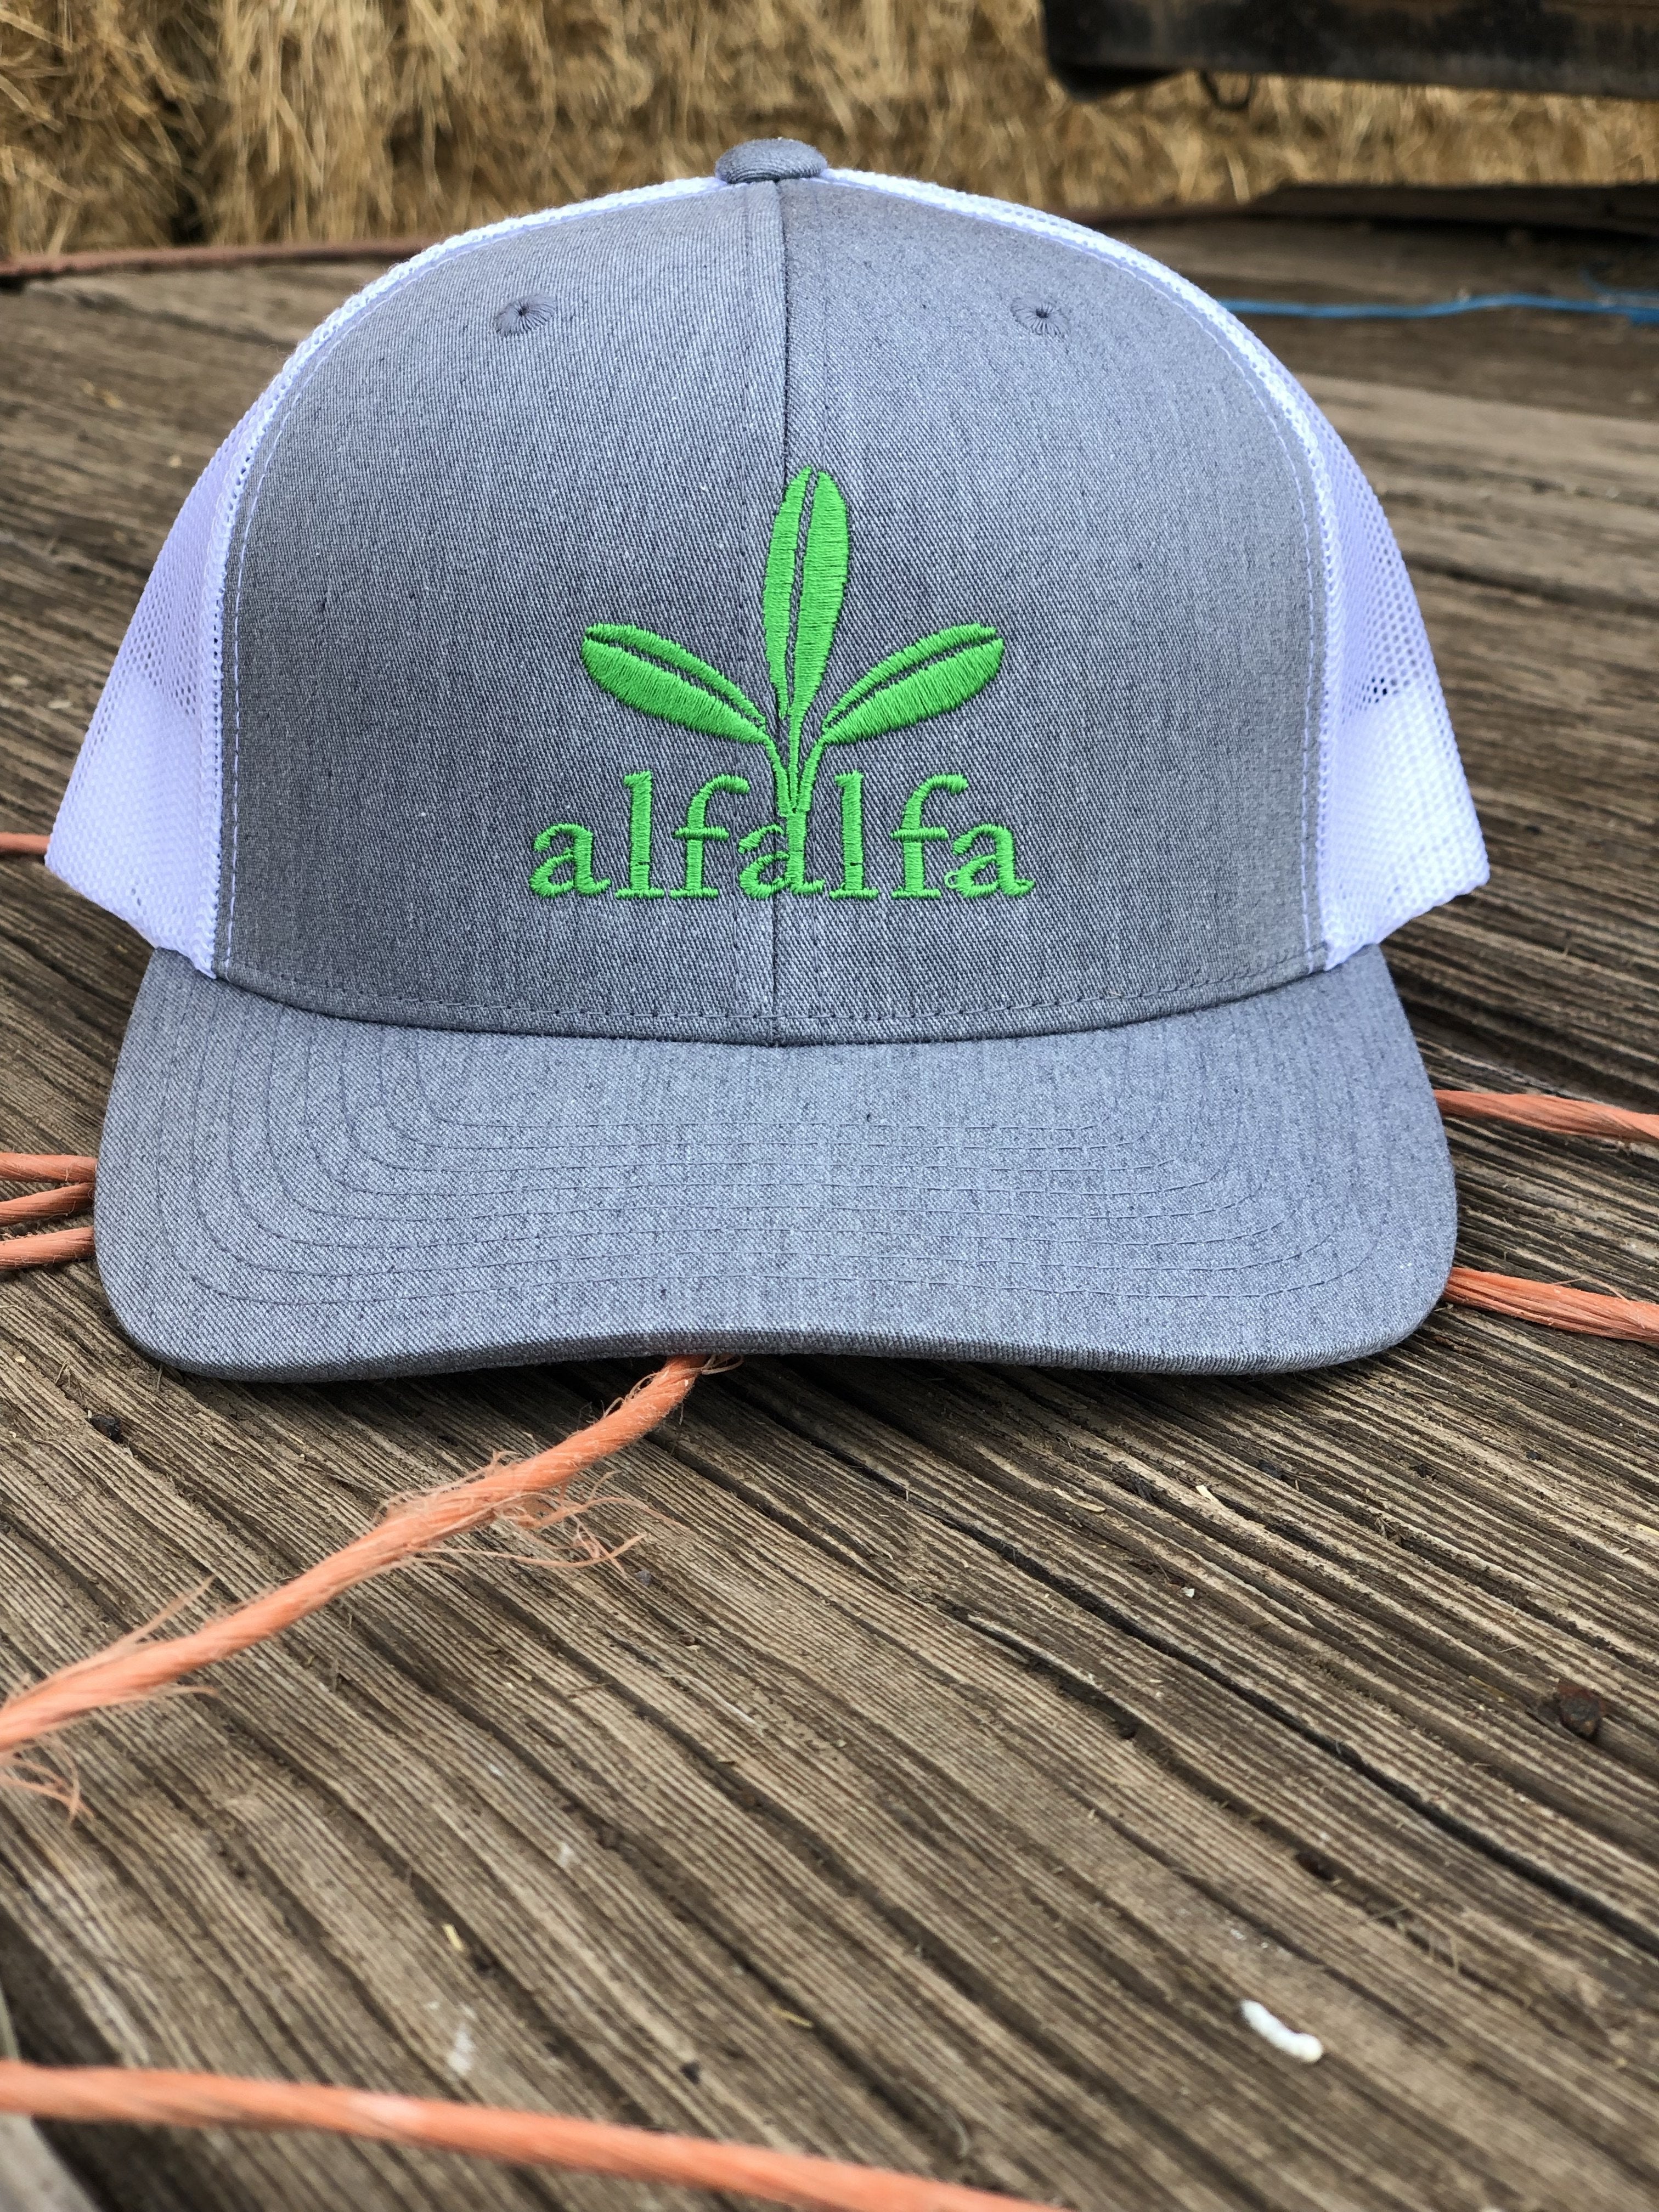 Bales Hay Brand Hat: The Alfalfa - Bales Hay Sales/1891 Homestead